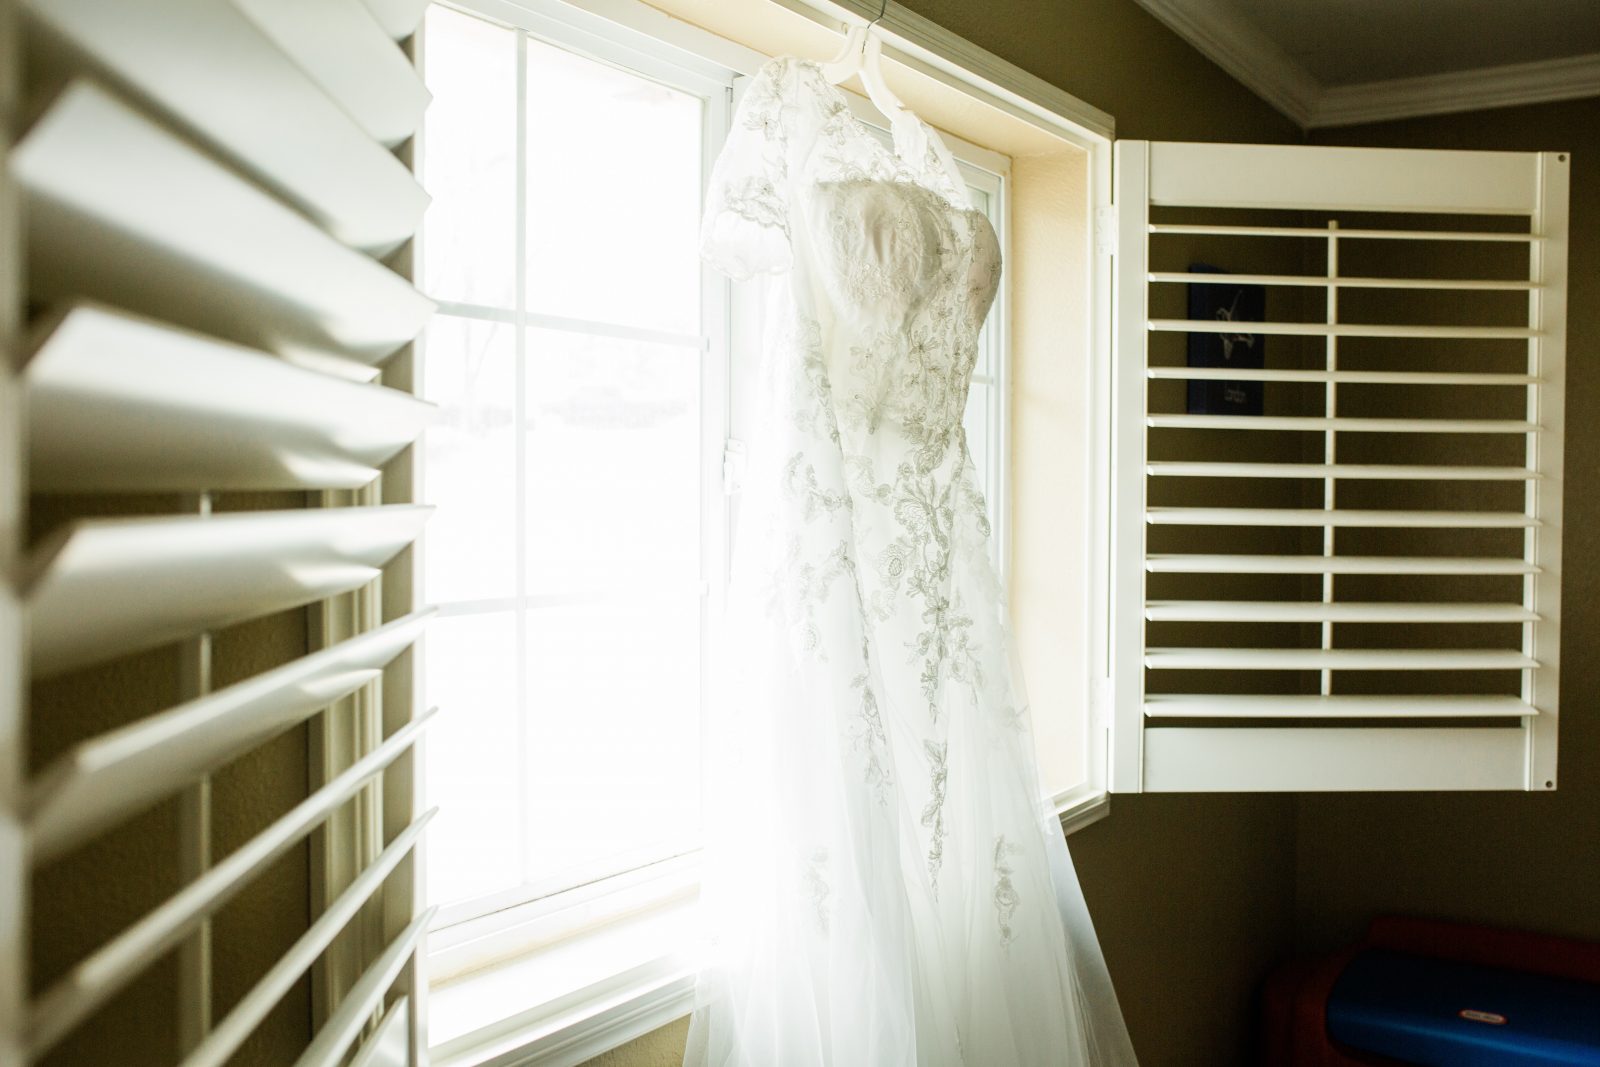 davids bridal wedding dress hanging in a window